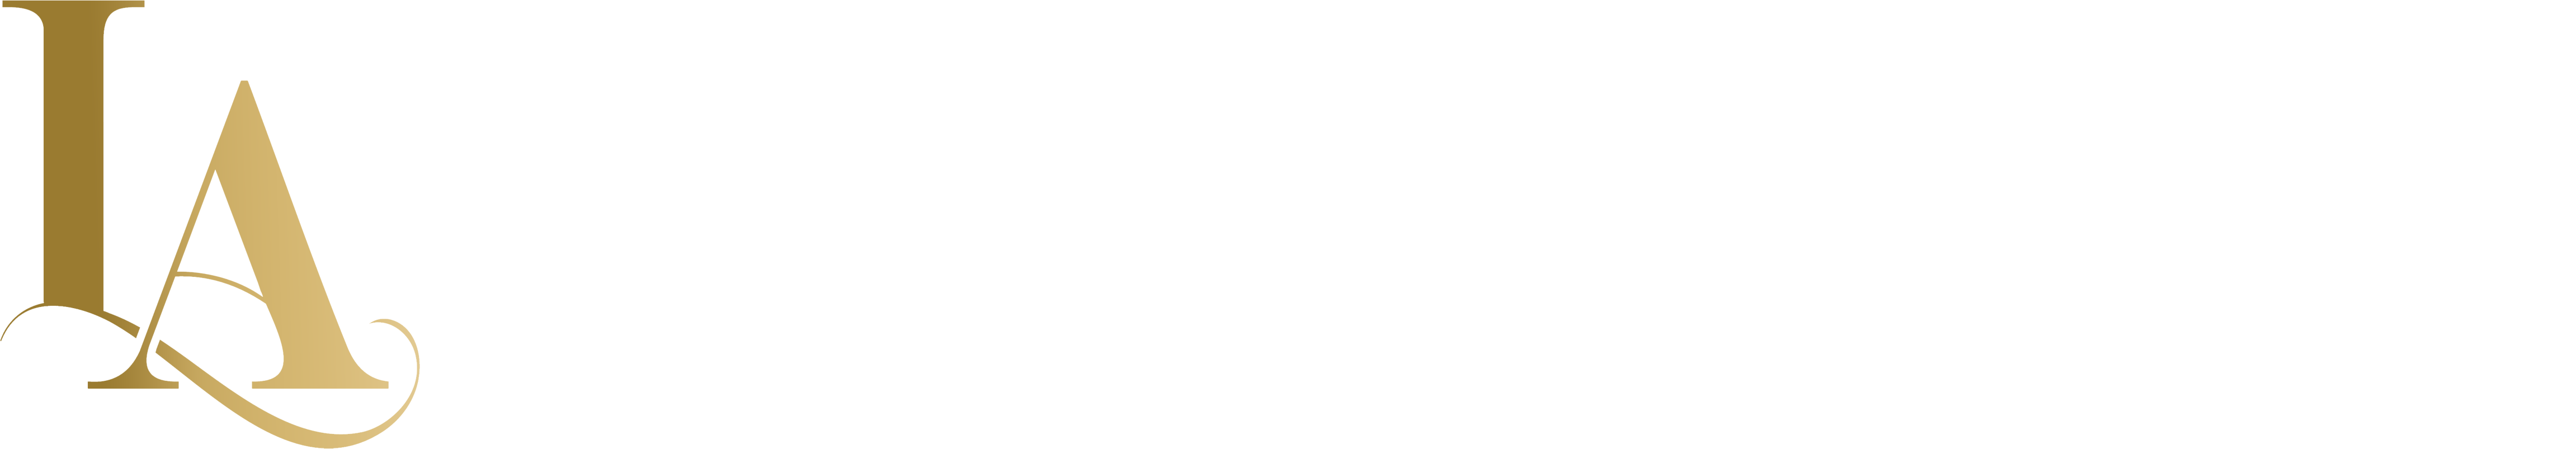 Luxury Access logo light